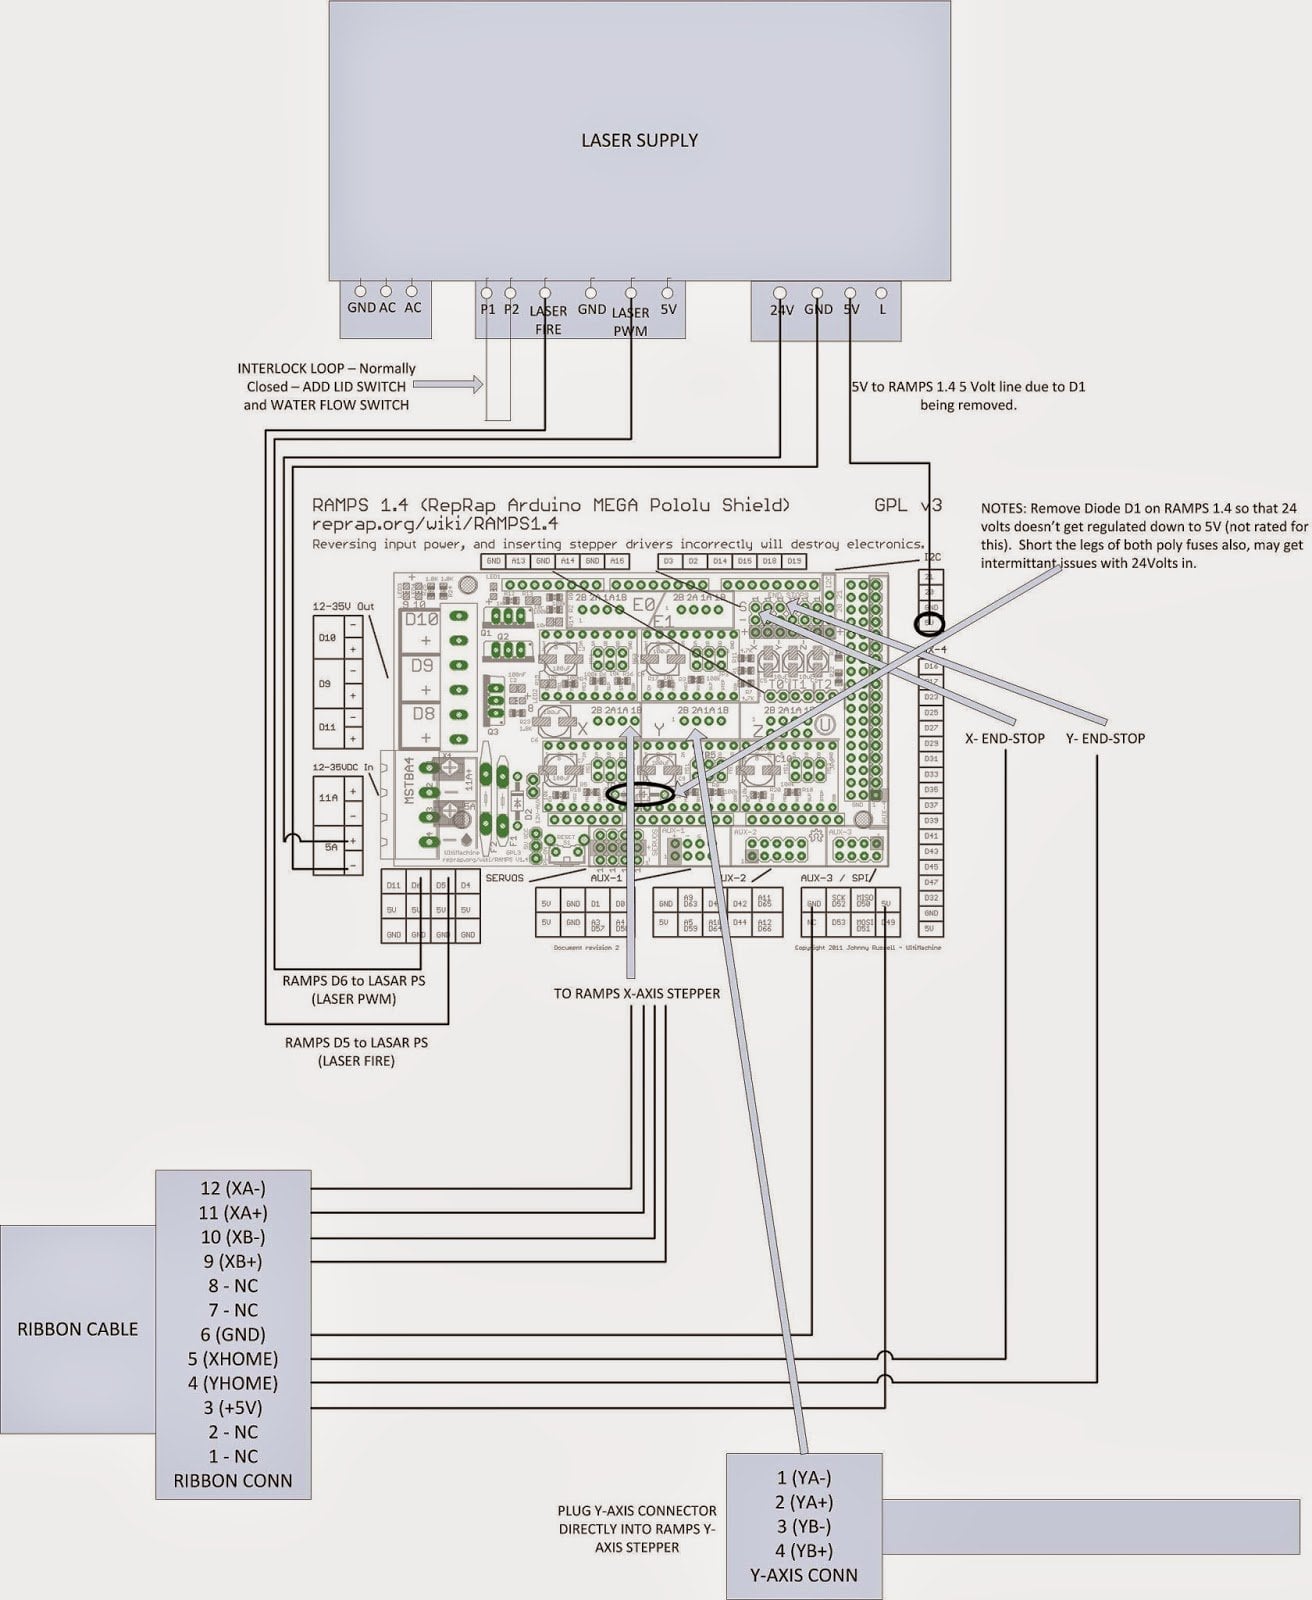 escort x50 wiring diagram